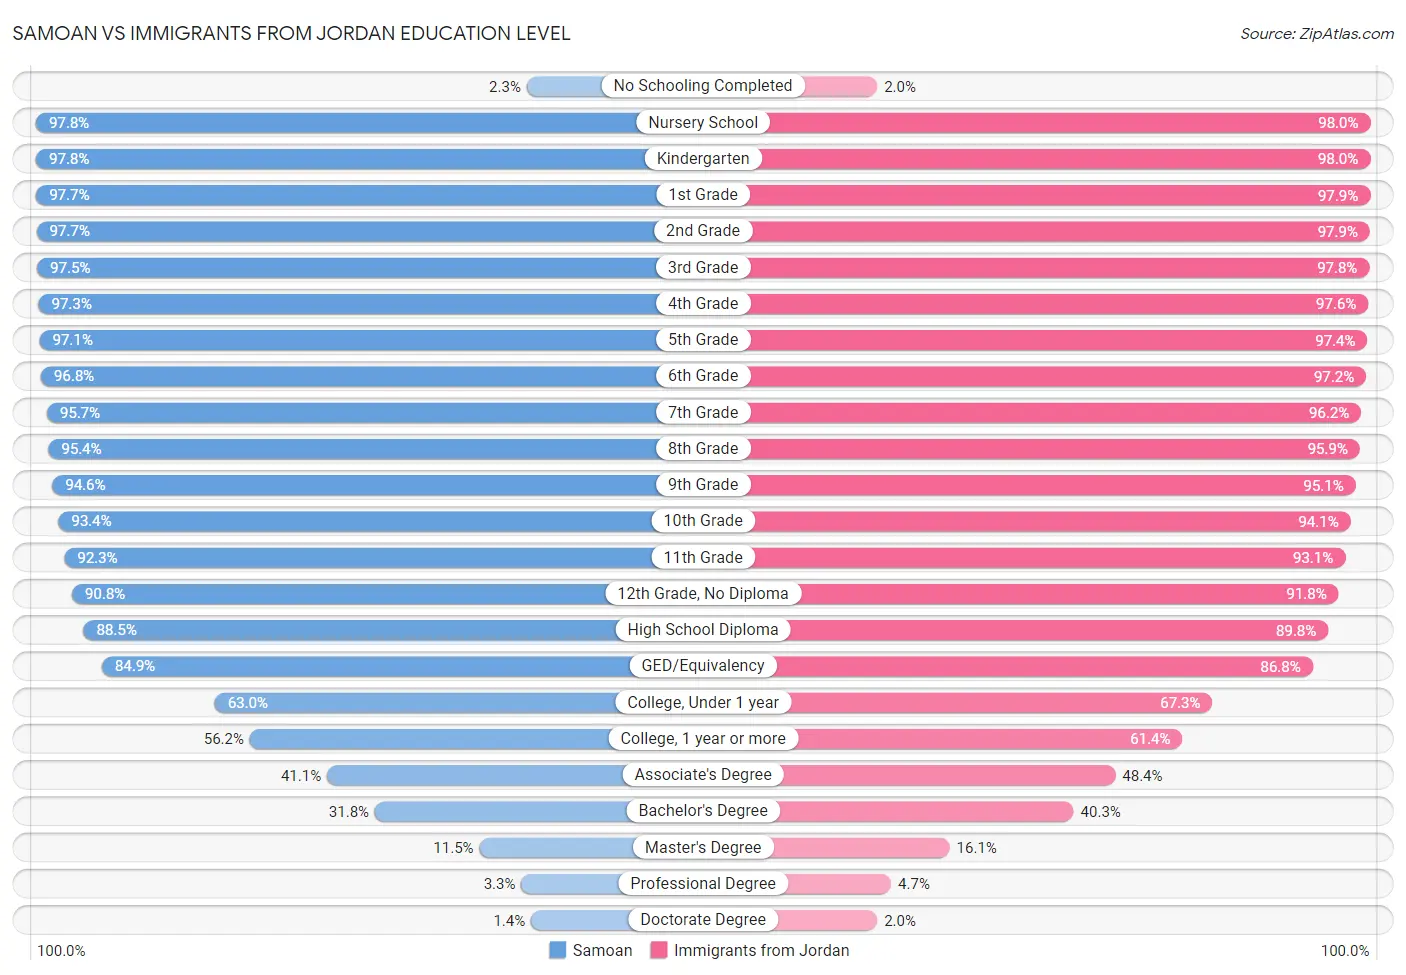 Samoan vs Immigrants from Jordan Education Level